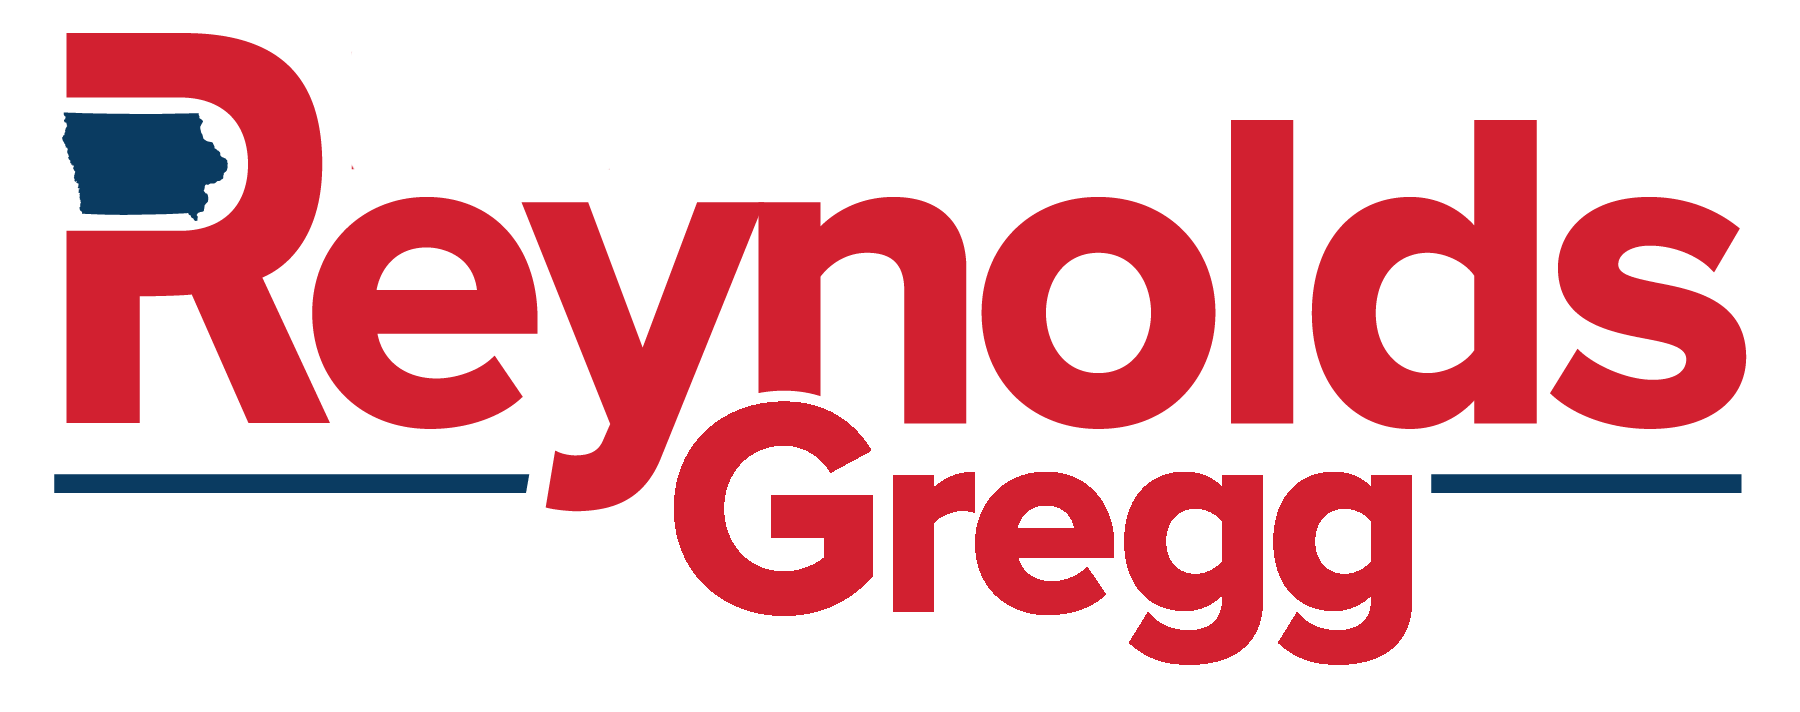 Reynolds gregg logo 2